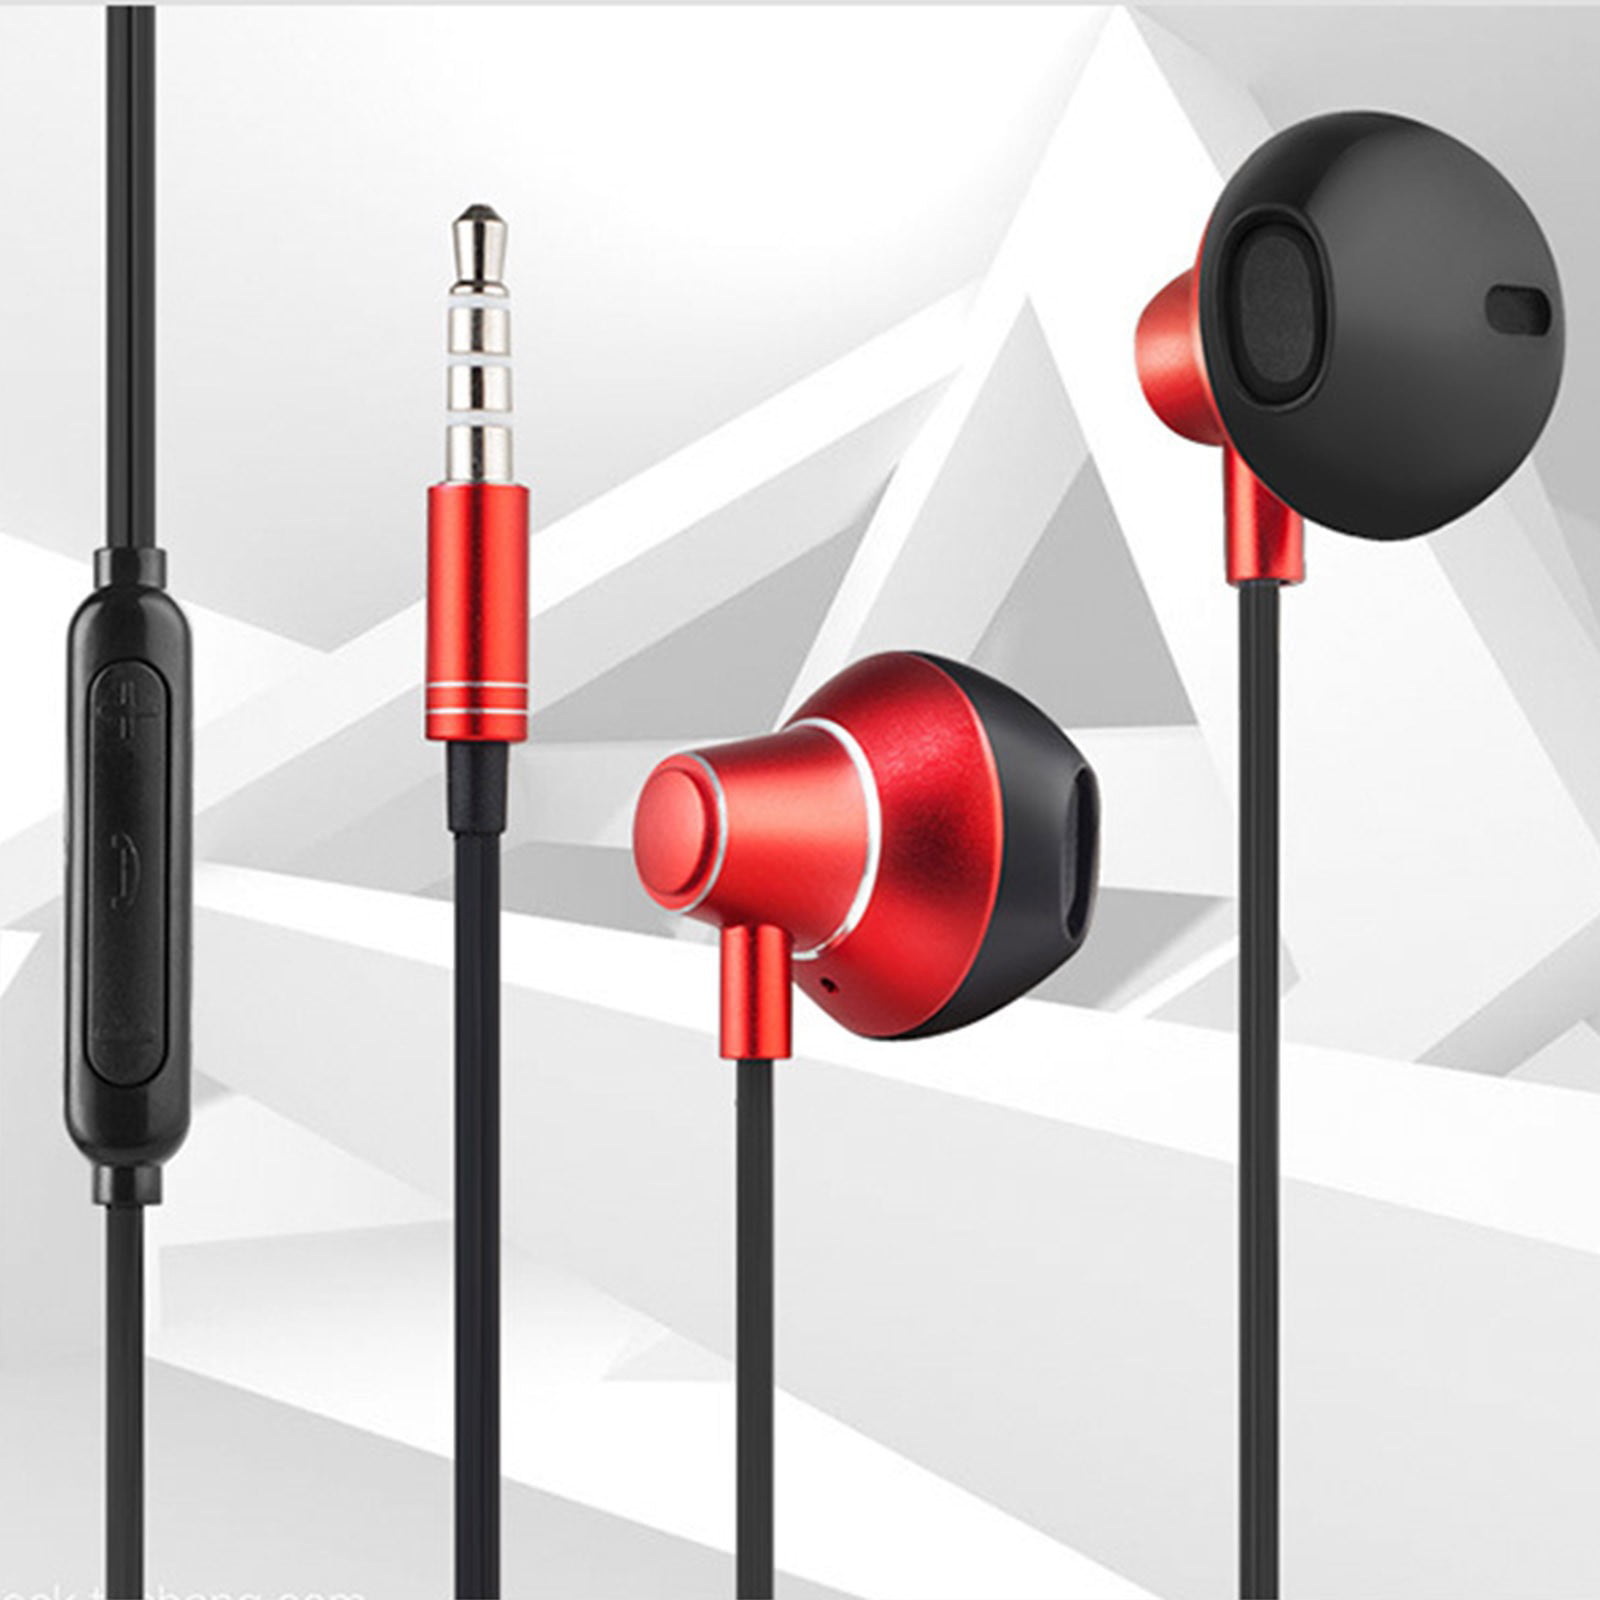 REALMAX® 3.5mm Audio Y Splitter Cord Cable for Speaker Headphones Earphones Earplugs